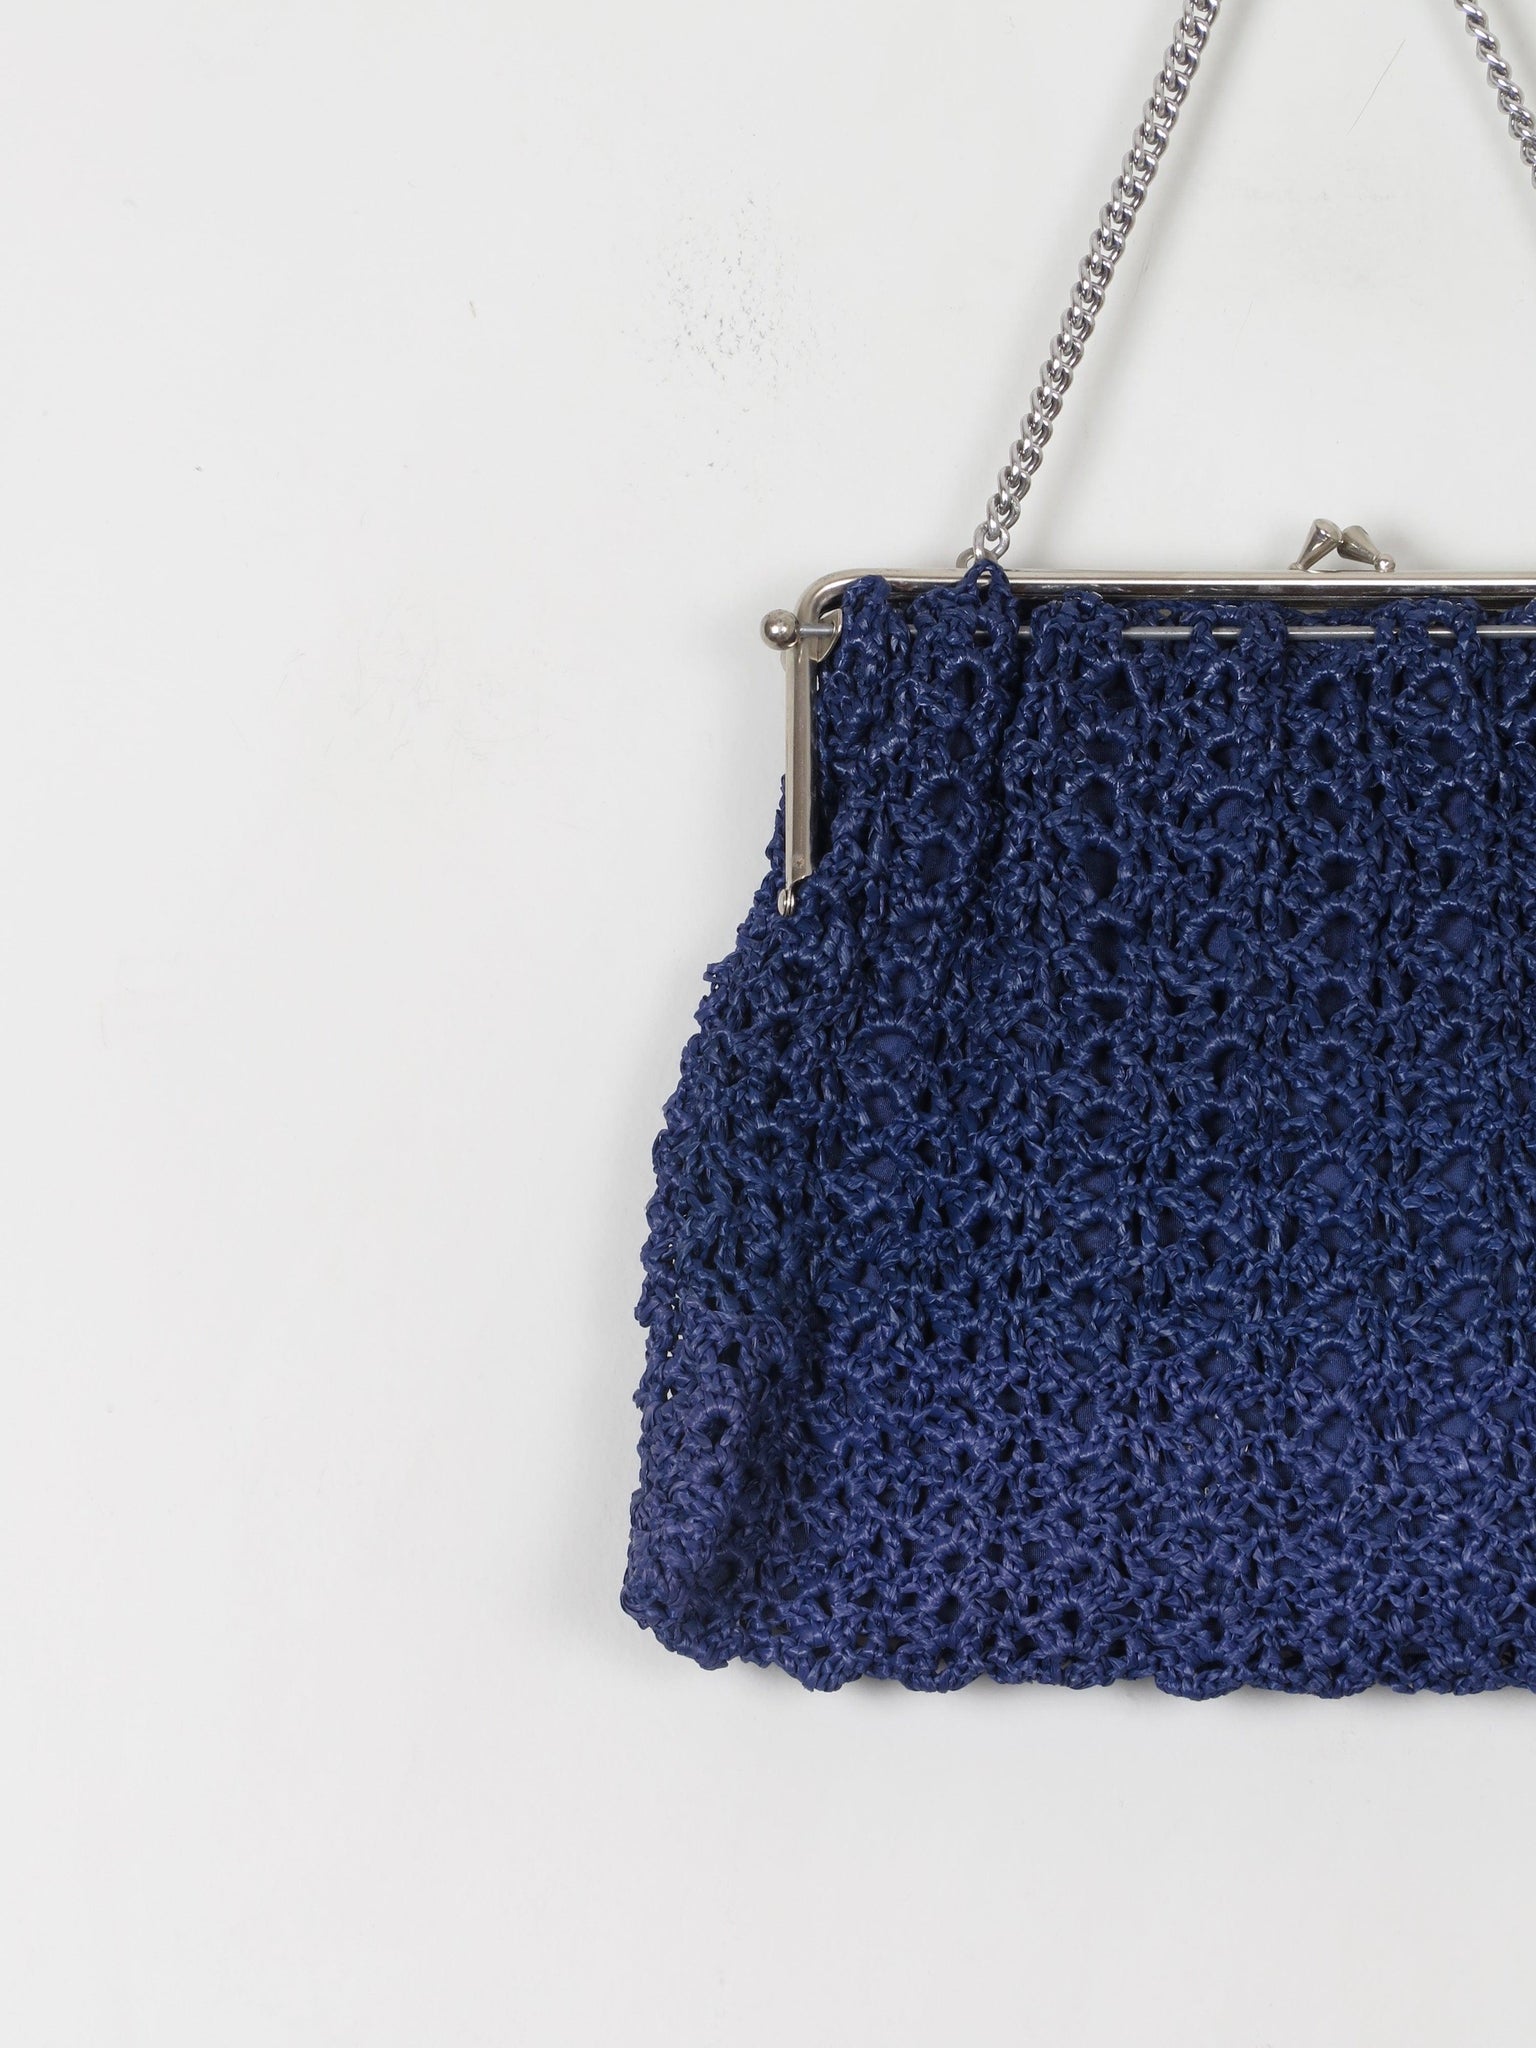 Medium Size Blue/Navy Vintage Crochet Hand Bag With Metal Frame - The Harlequin